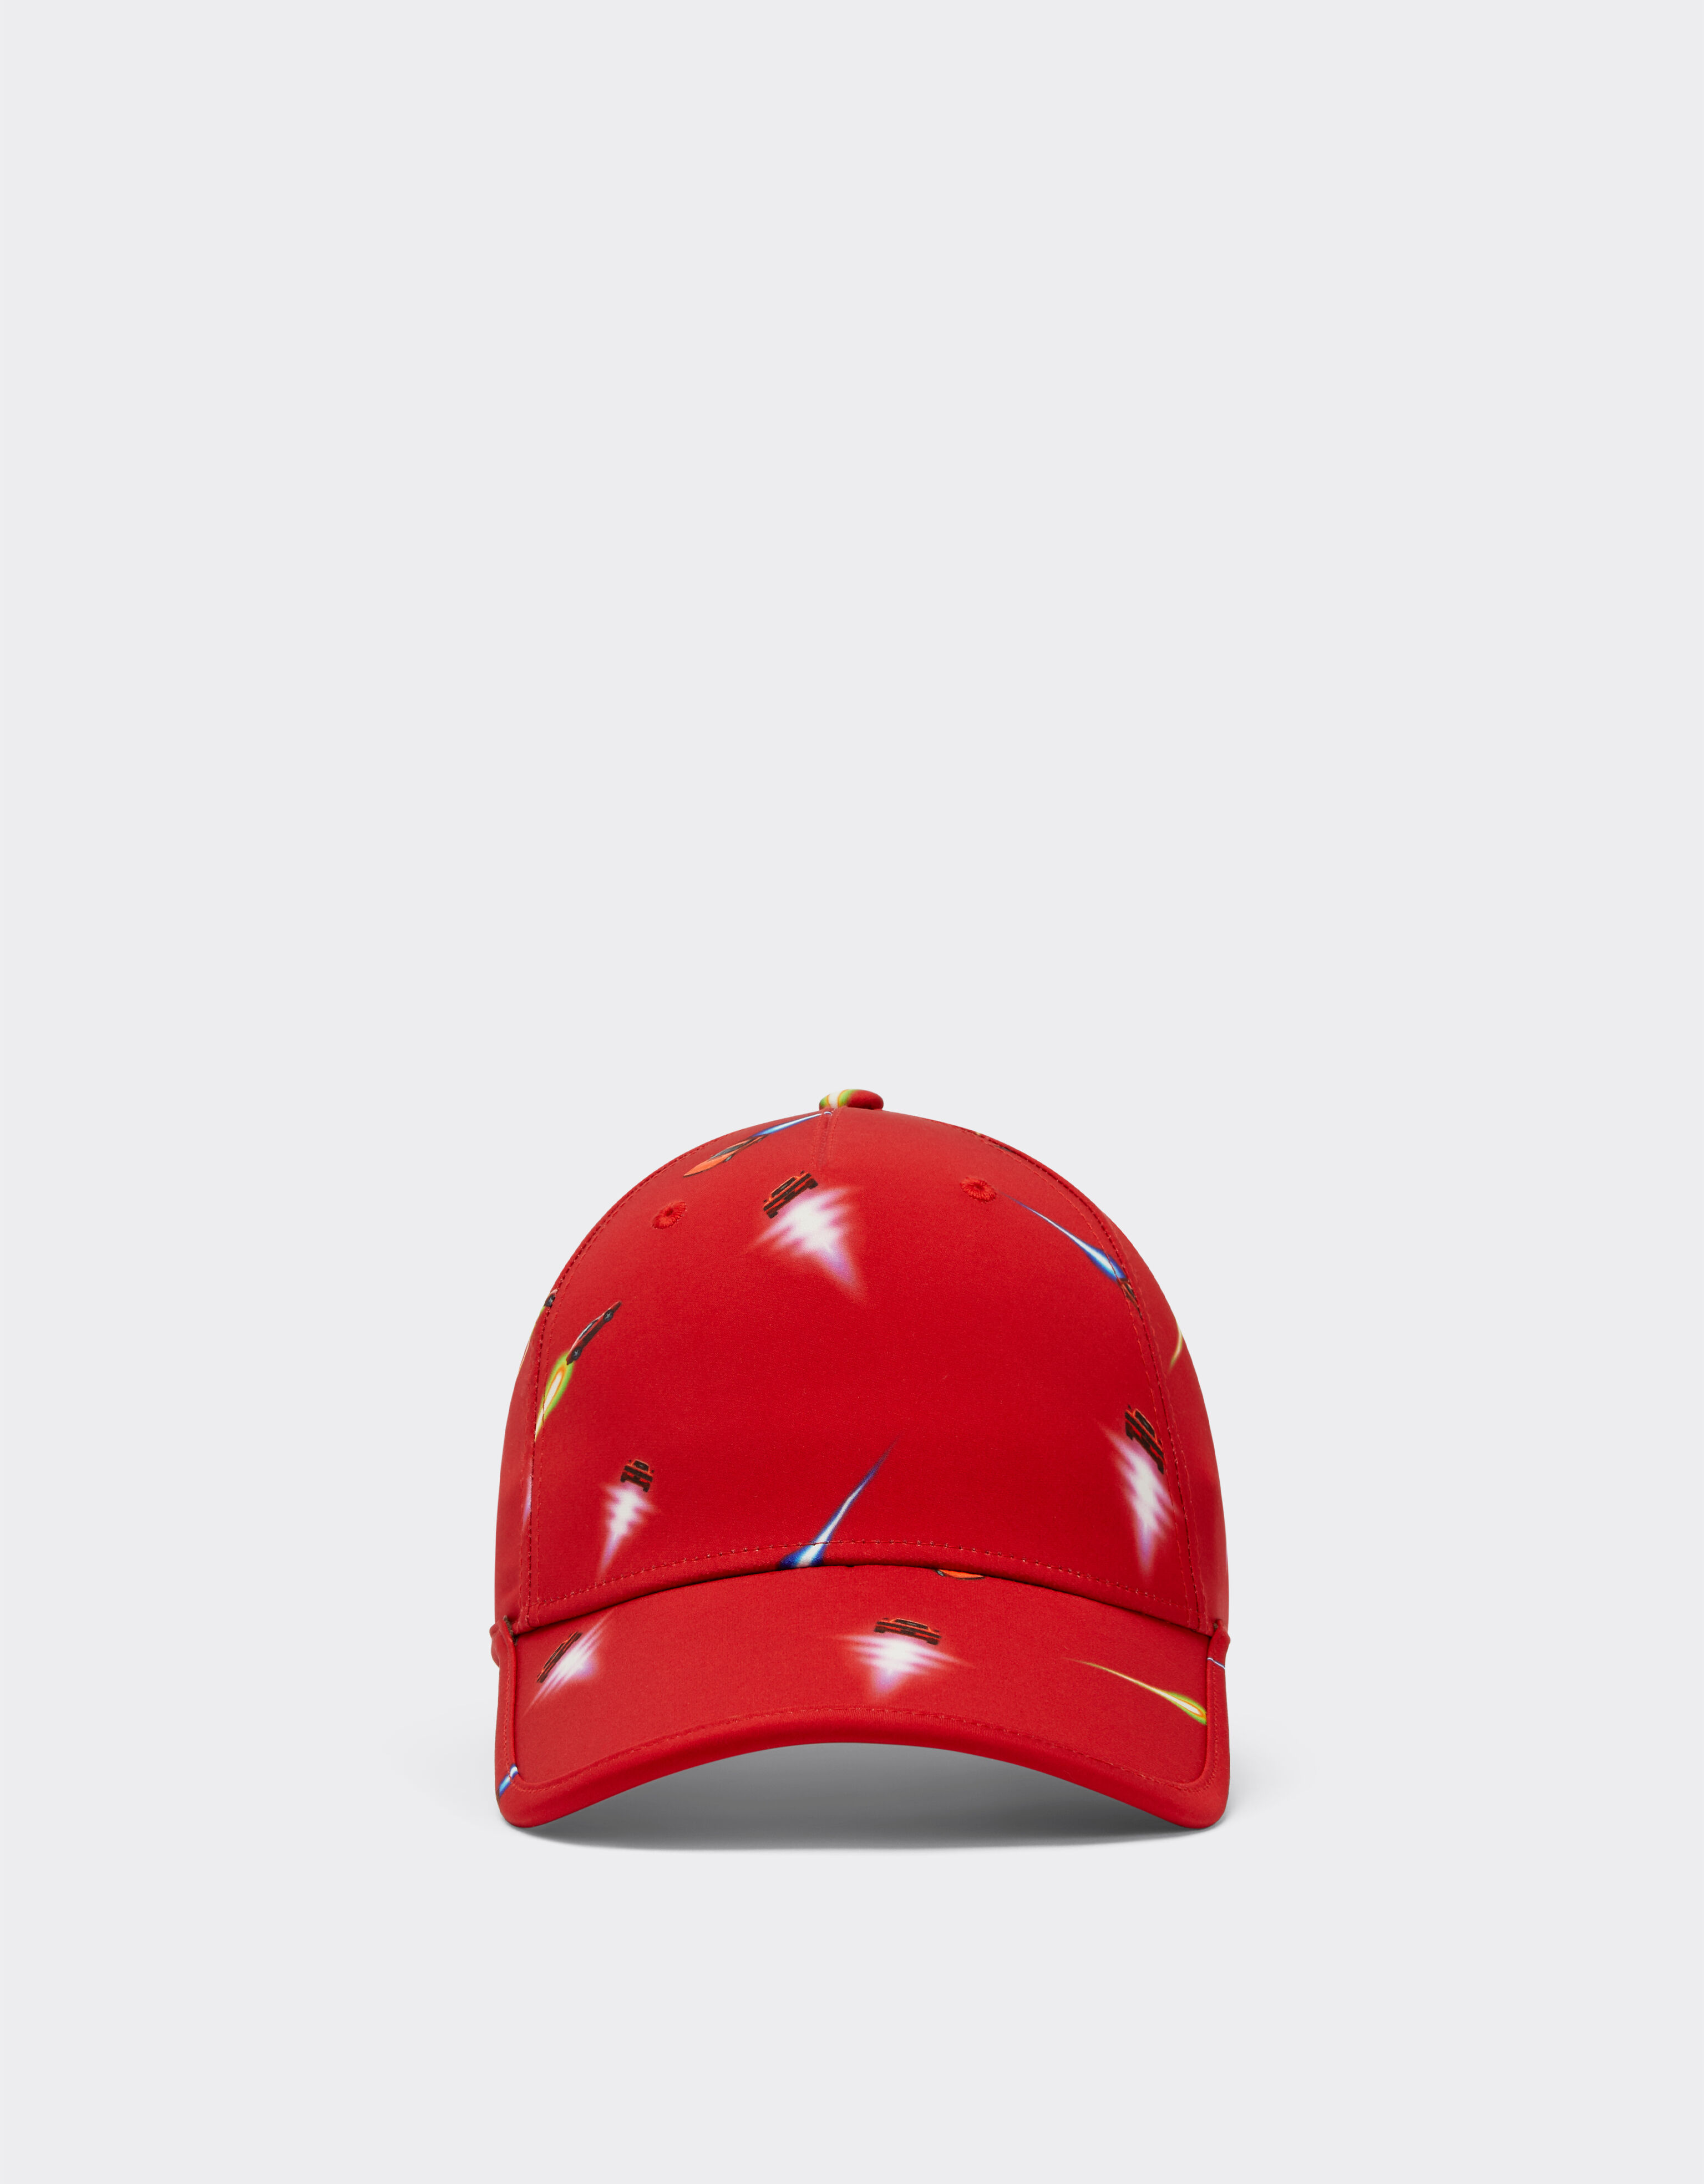 Ferrari Hat with Ferrari Cars print Rosso Corsa 20162fK